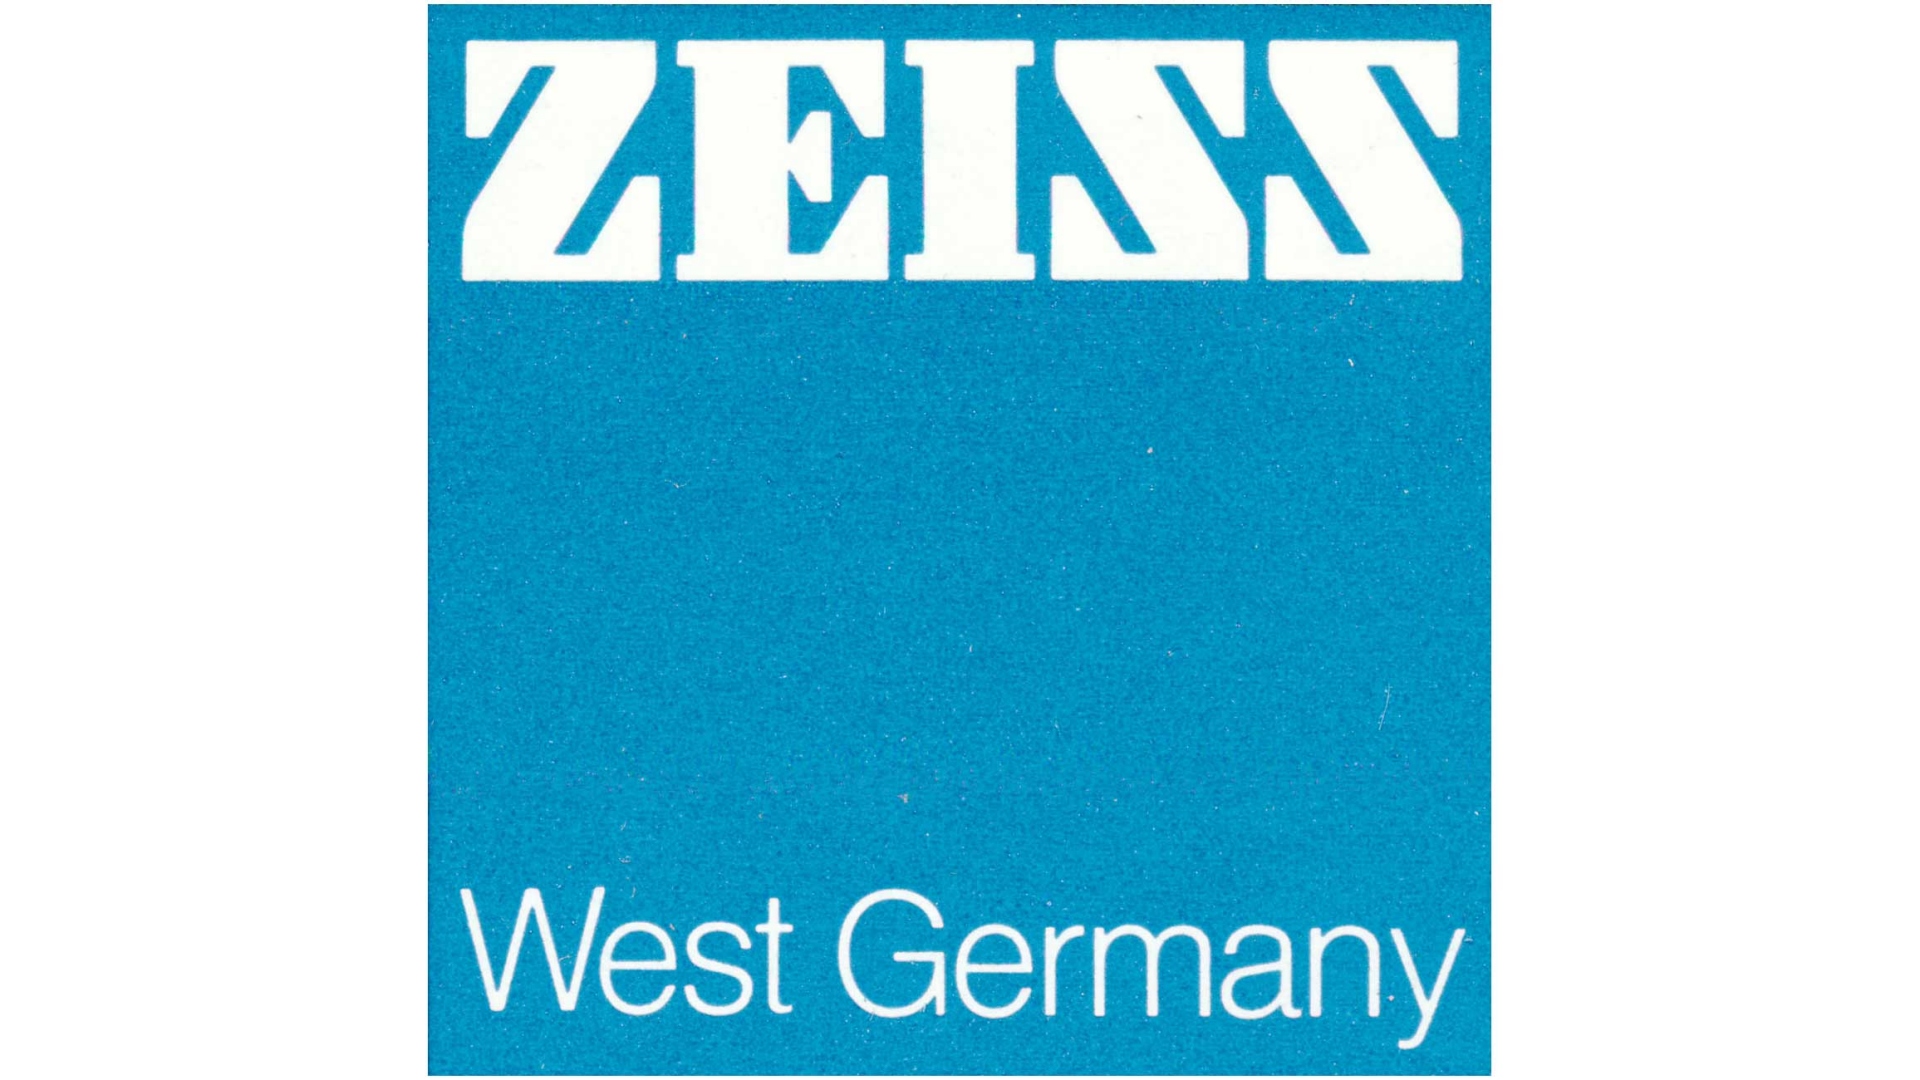 ZEISS im Quadrat mit West Germany darunter.